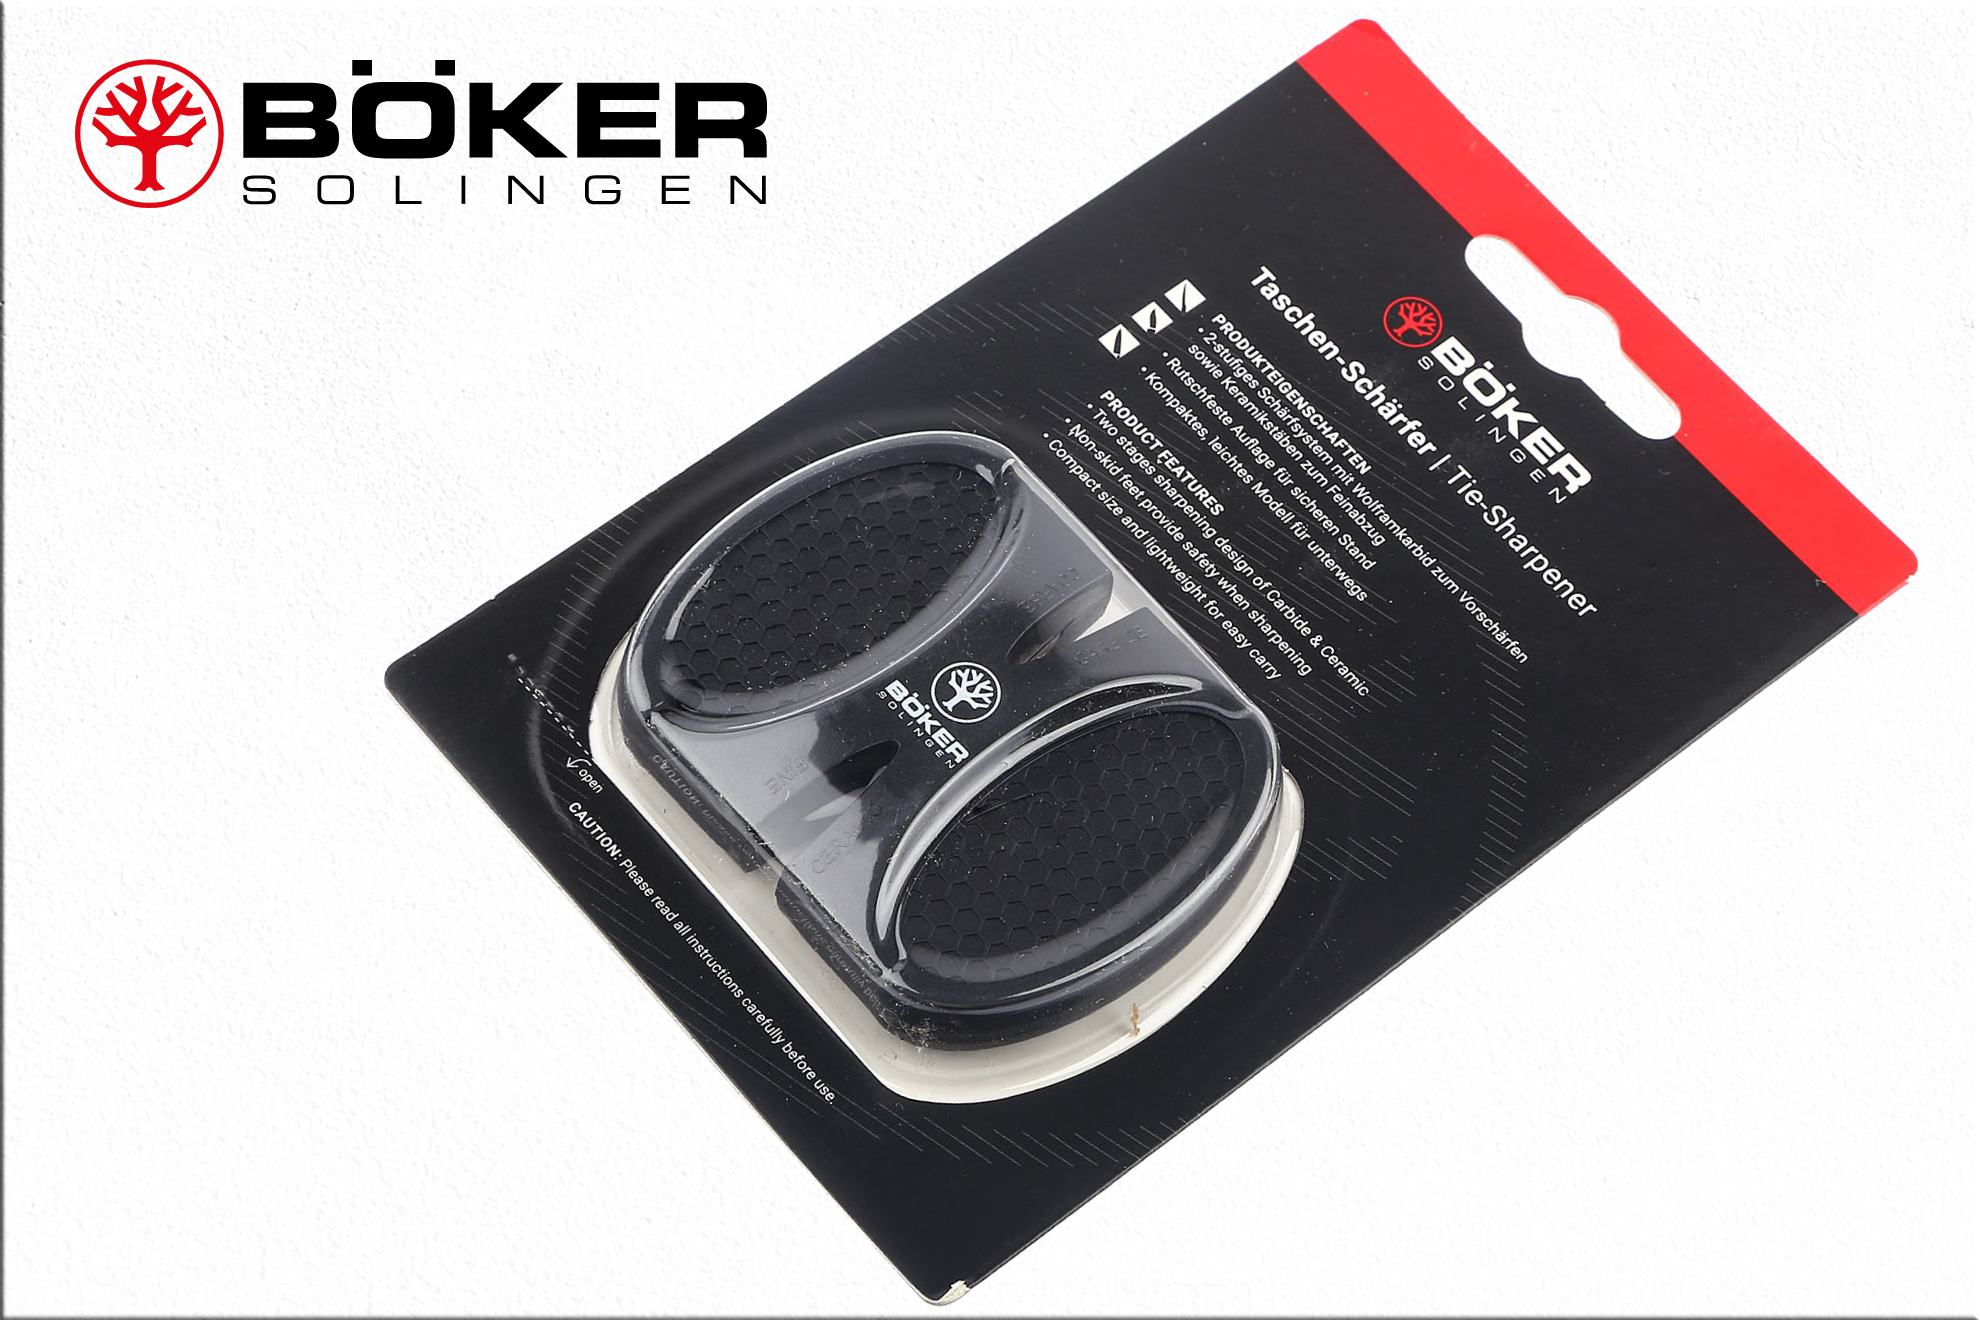 Точилка Boker 09BO375, походно-полевая (Pocket Sharpener), карбид + керамика.